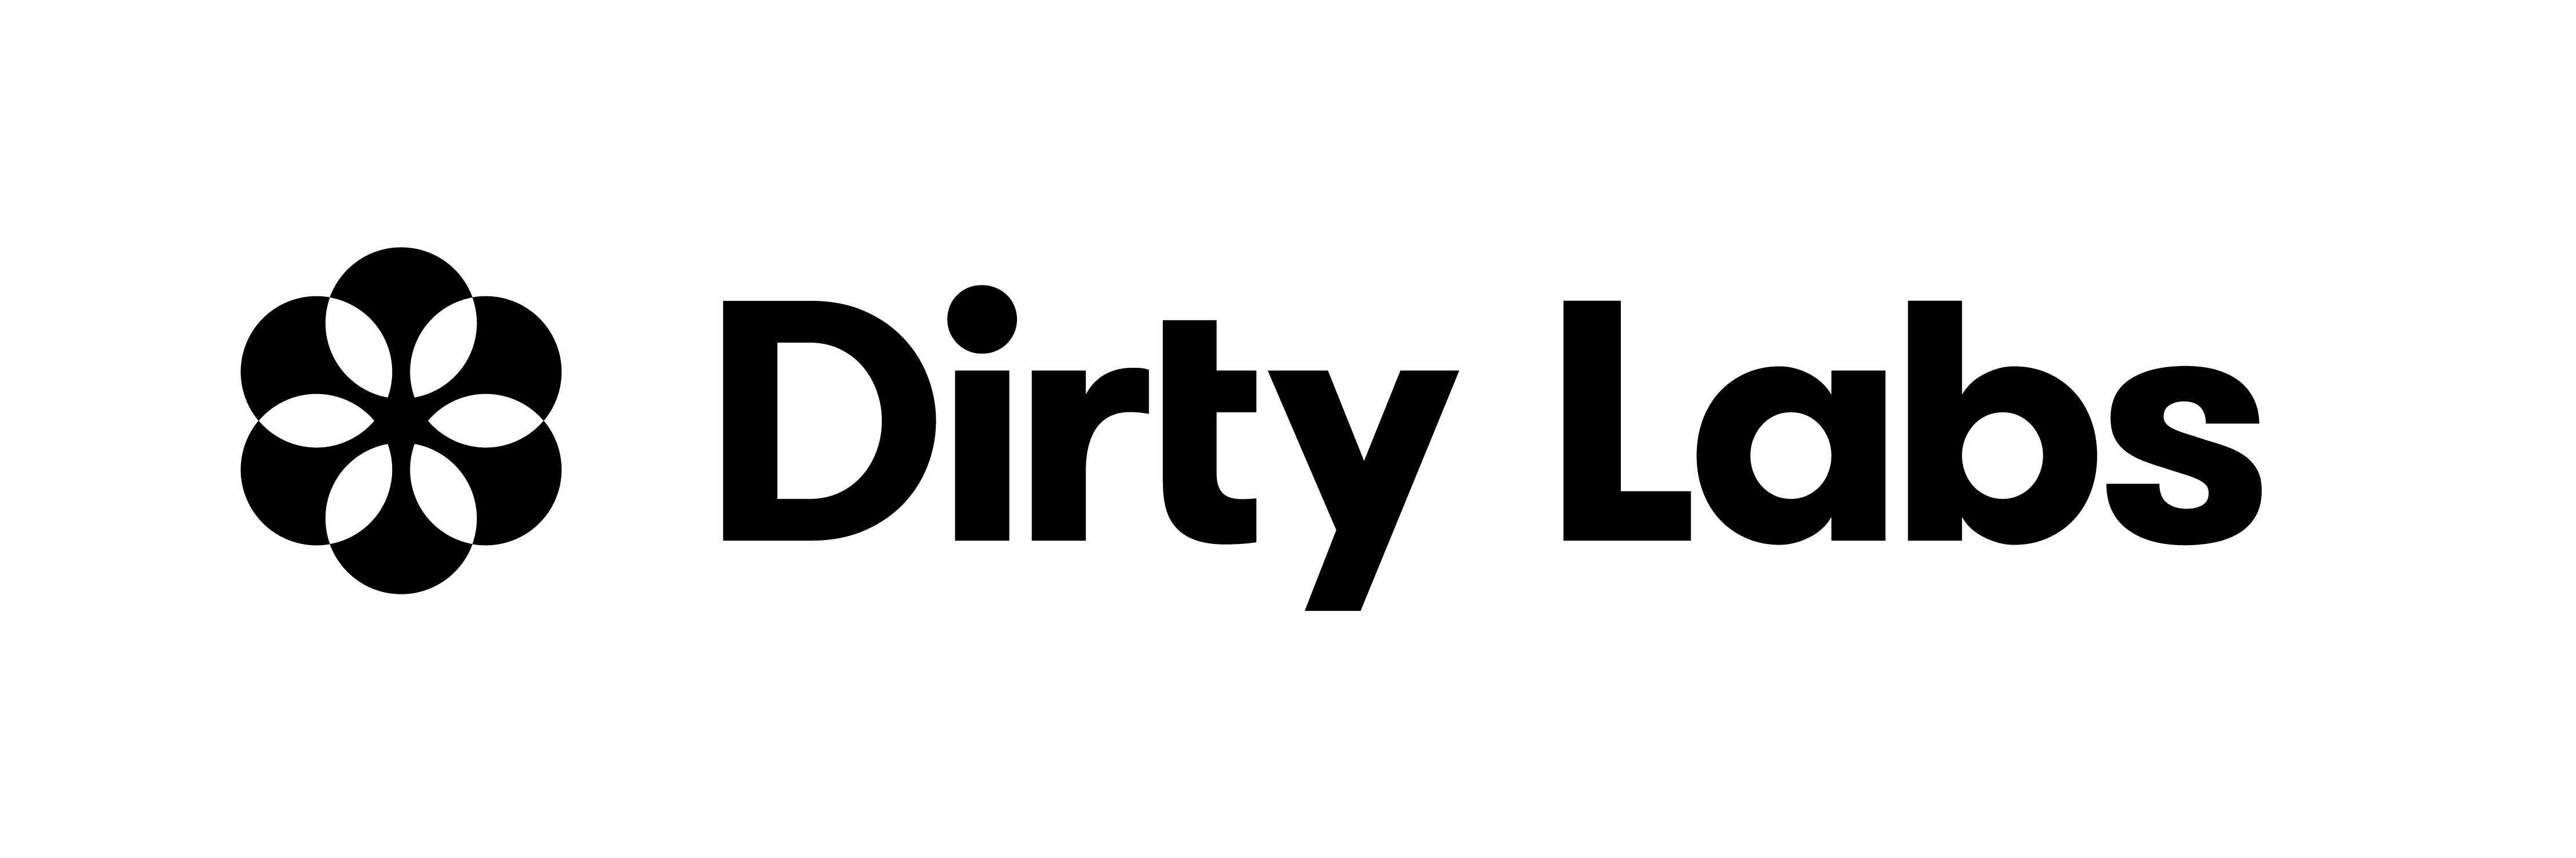 Dirty Labs logo